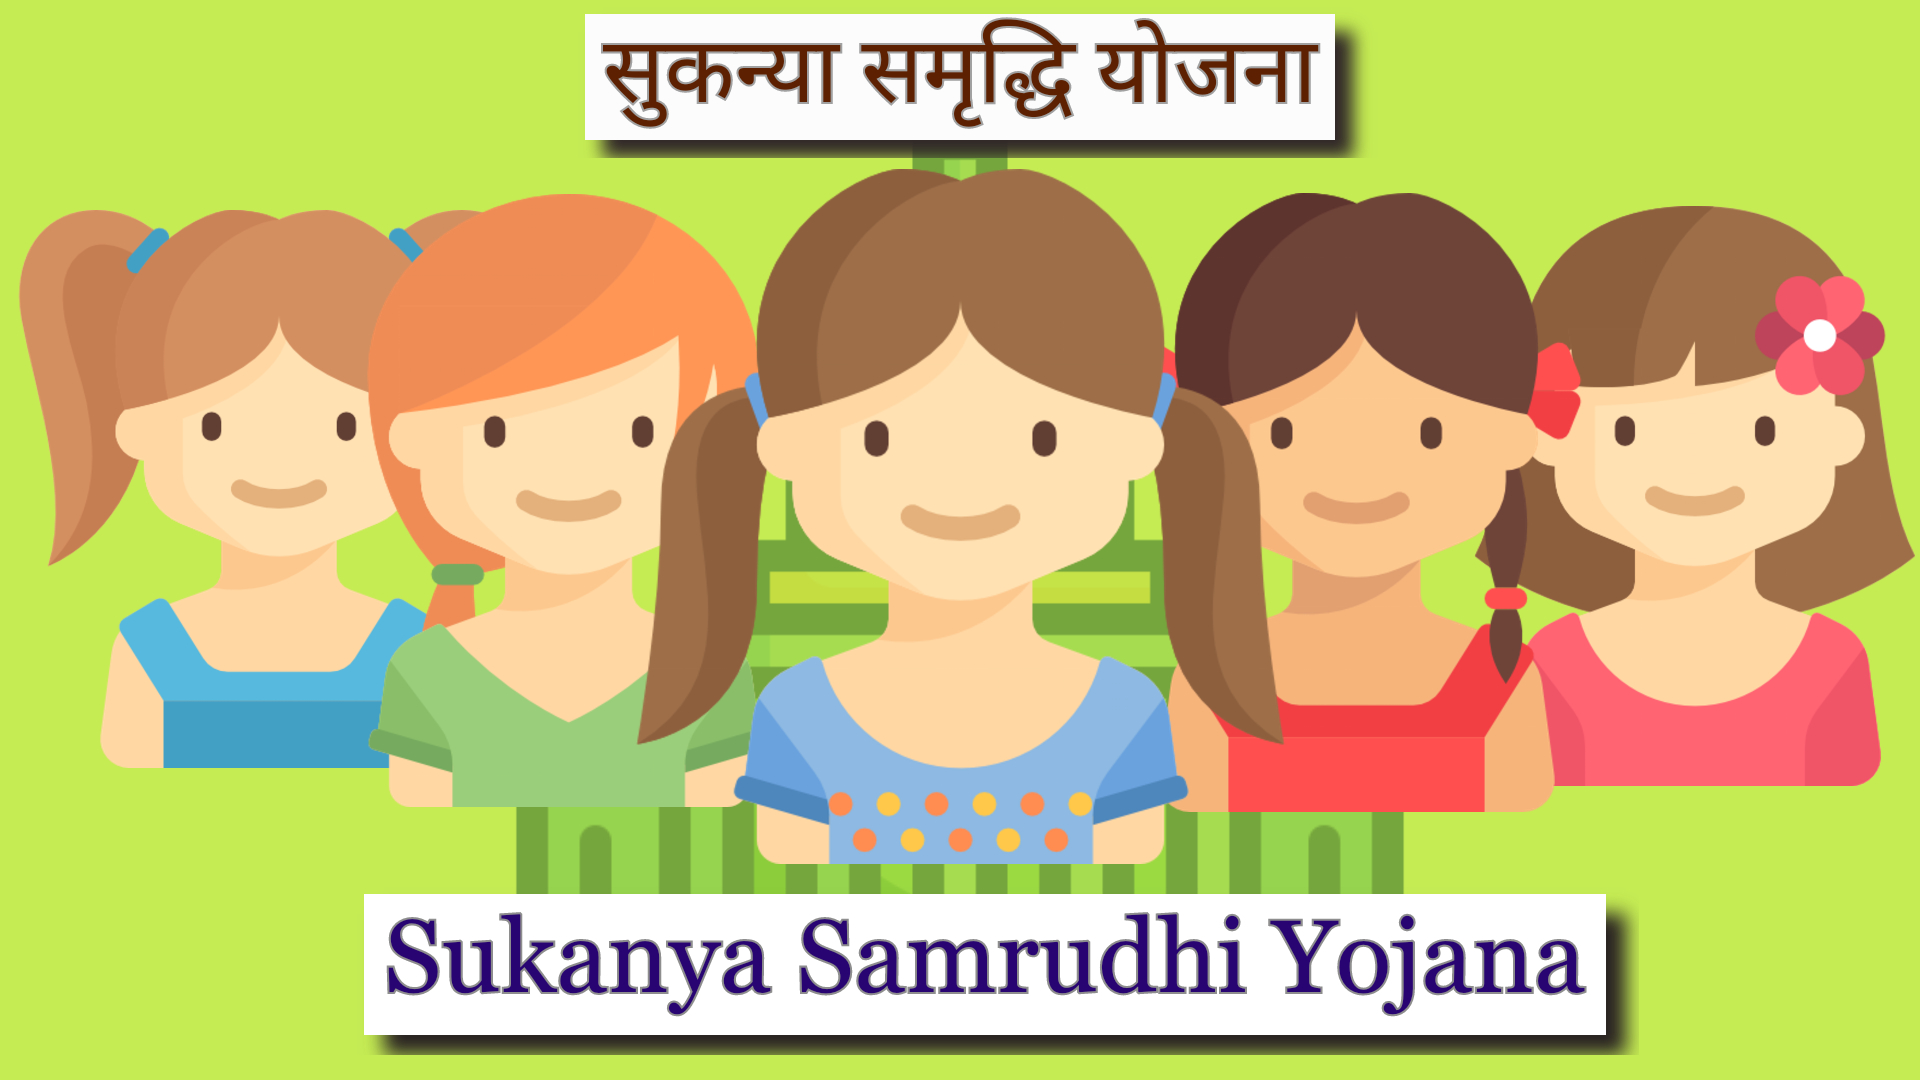 sukanya samriddhi yojana in hindi